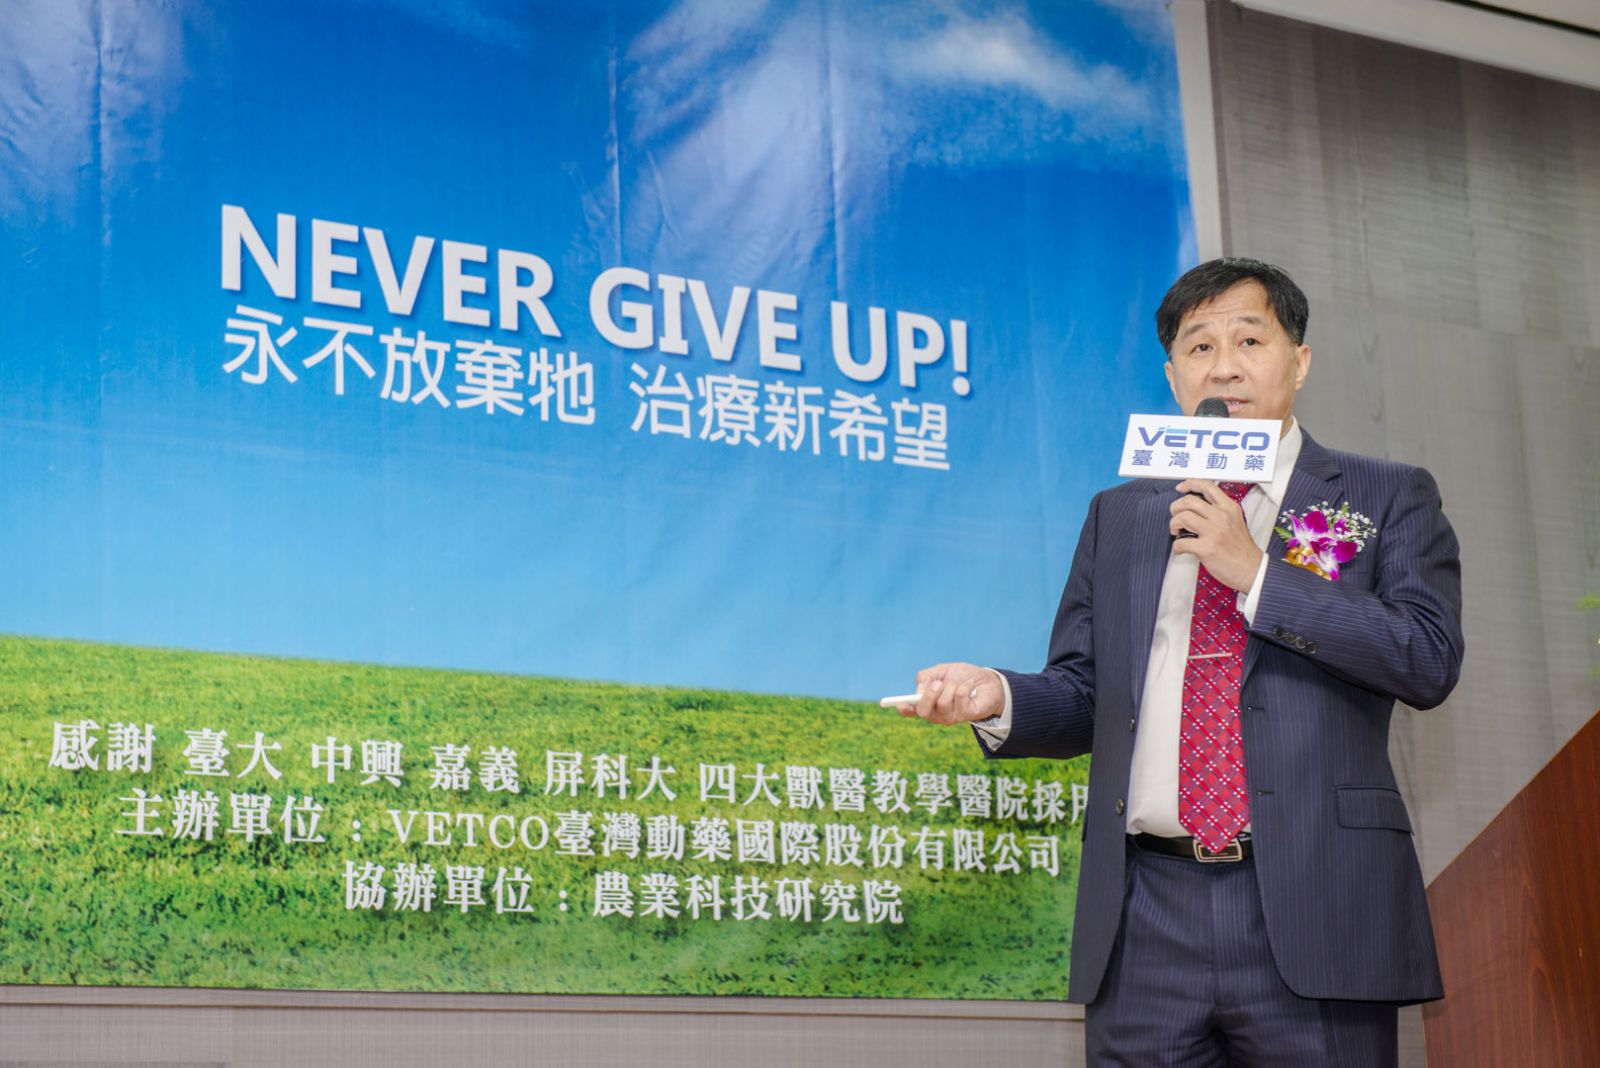 James Chen, the CEO of Vetco Pharmaceuticals Inc.